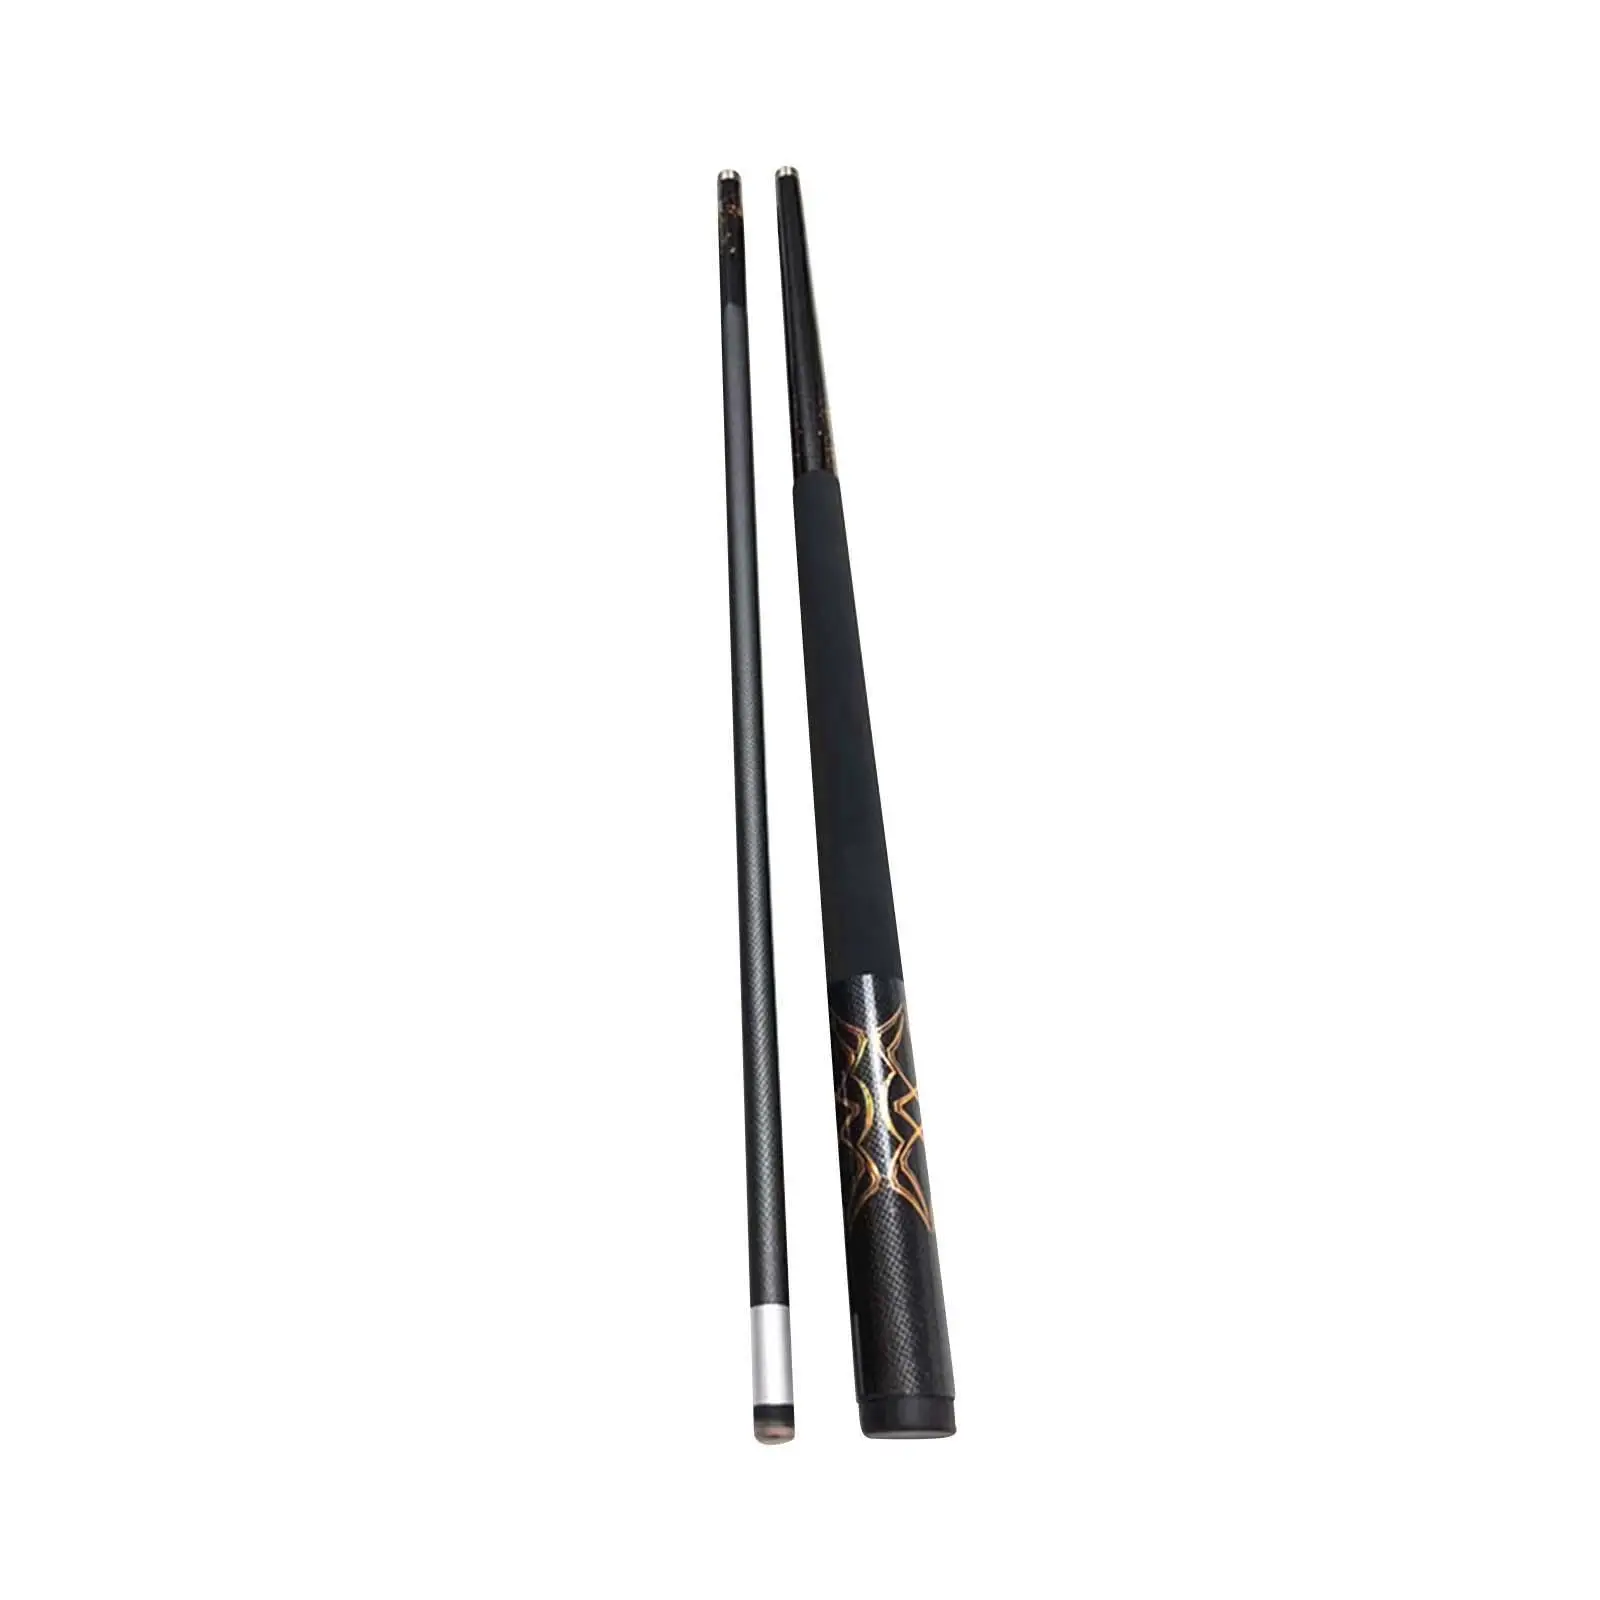 Pool Cue Carbon Fiber 58 inch Segmented Billiard Cue Sticks for Unisex Adult